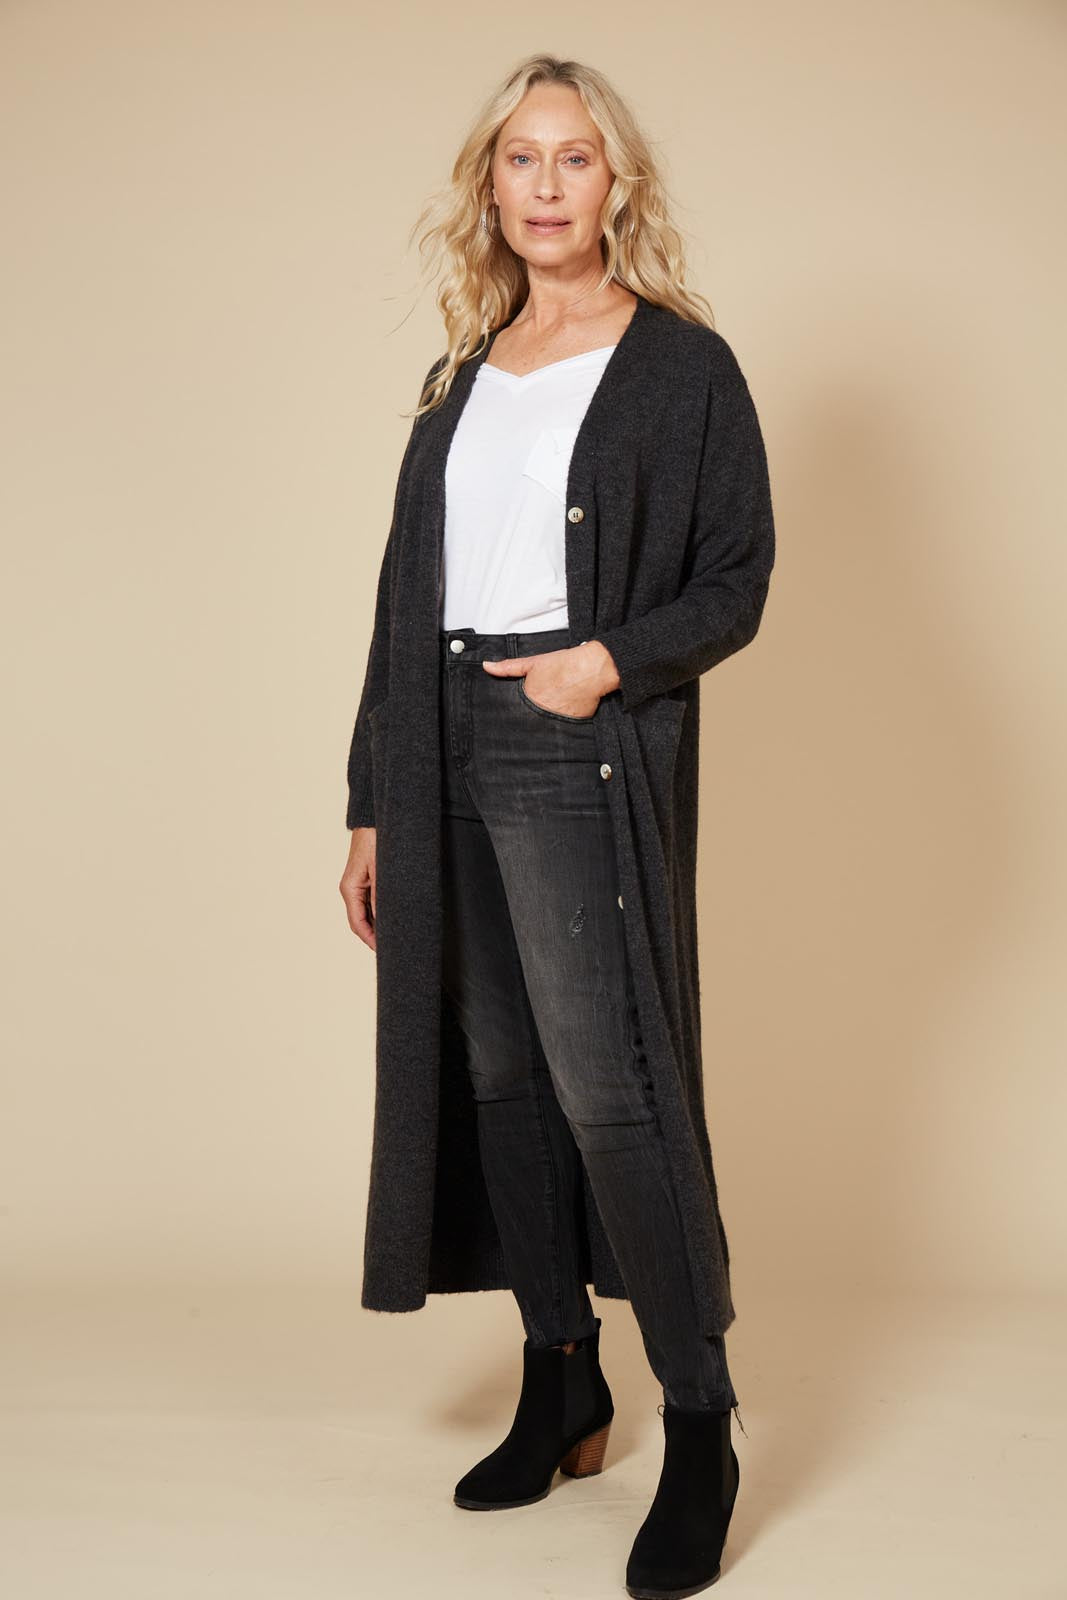 Kinsella Cardigan - Fossil - eb&ive Clothing - Knit Cardigan Long One Size